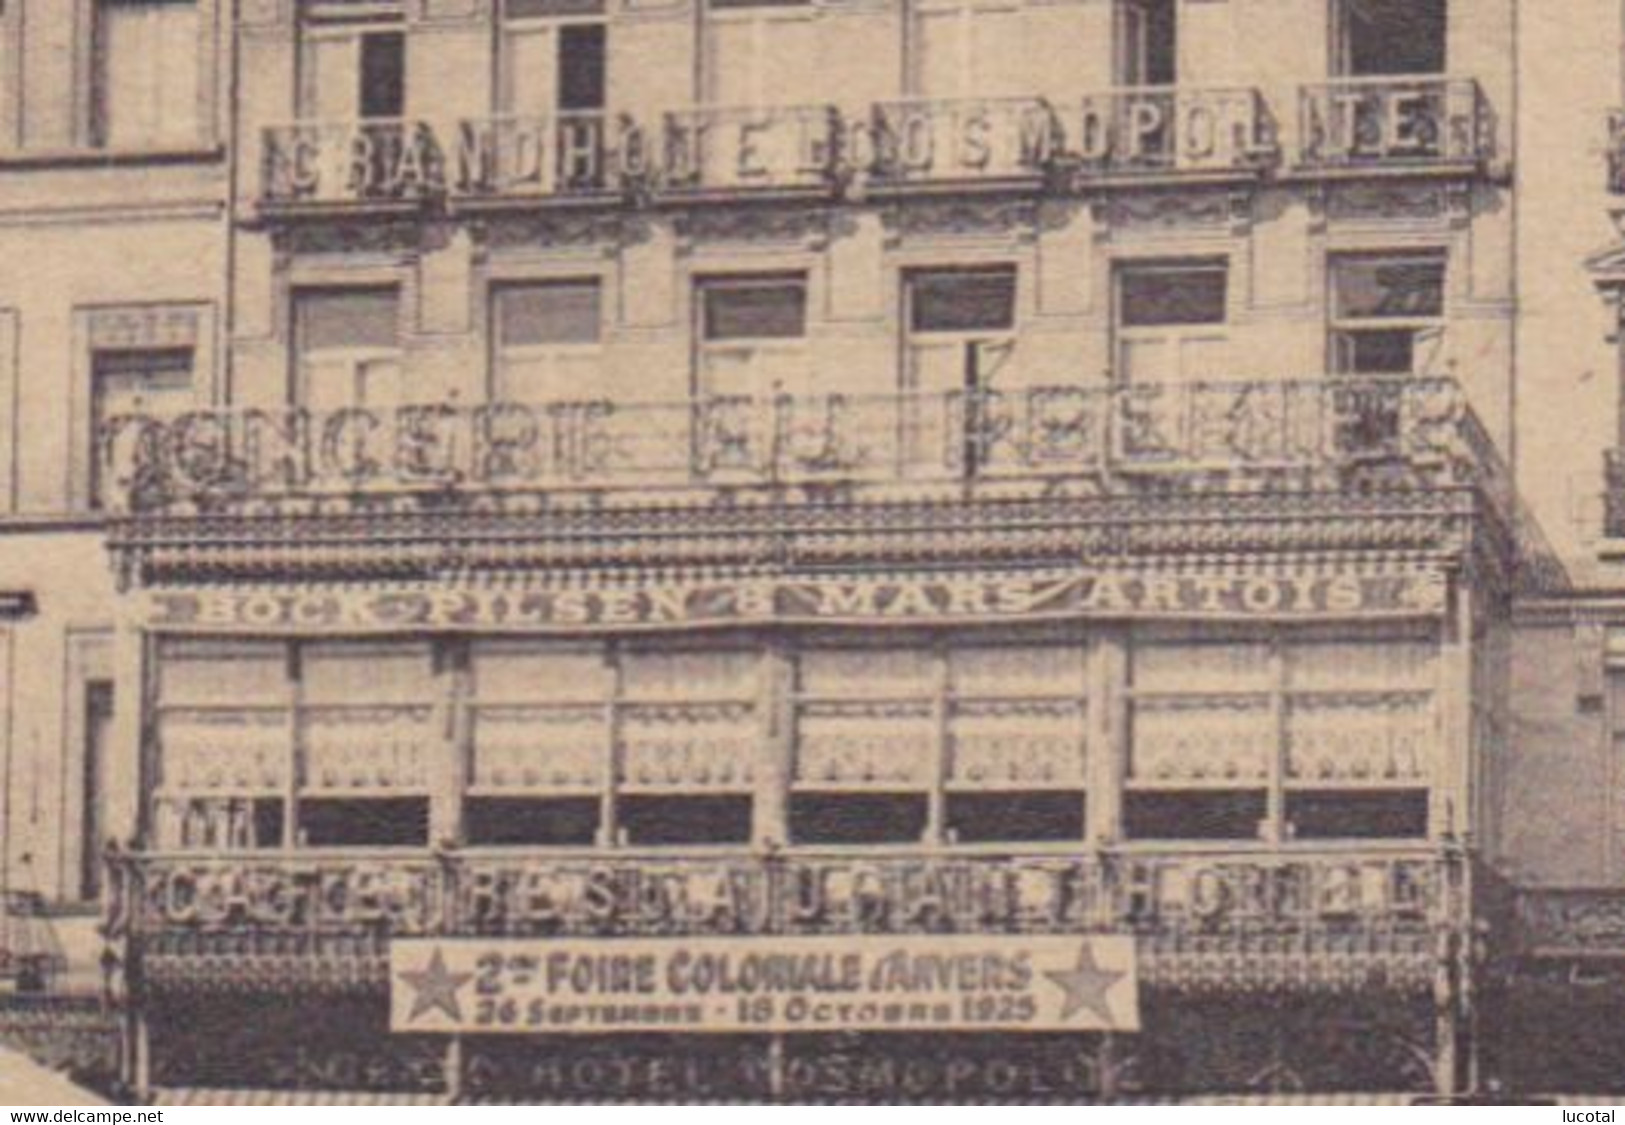 Bruxelles - Grand Hotel Cosmopolite - Edit. Nels / Thill - 4 Scans - Cafés, Hôtels, Restaurants